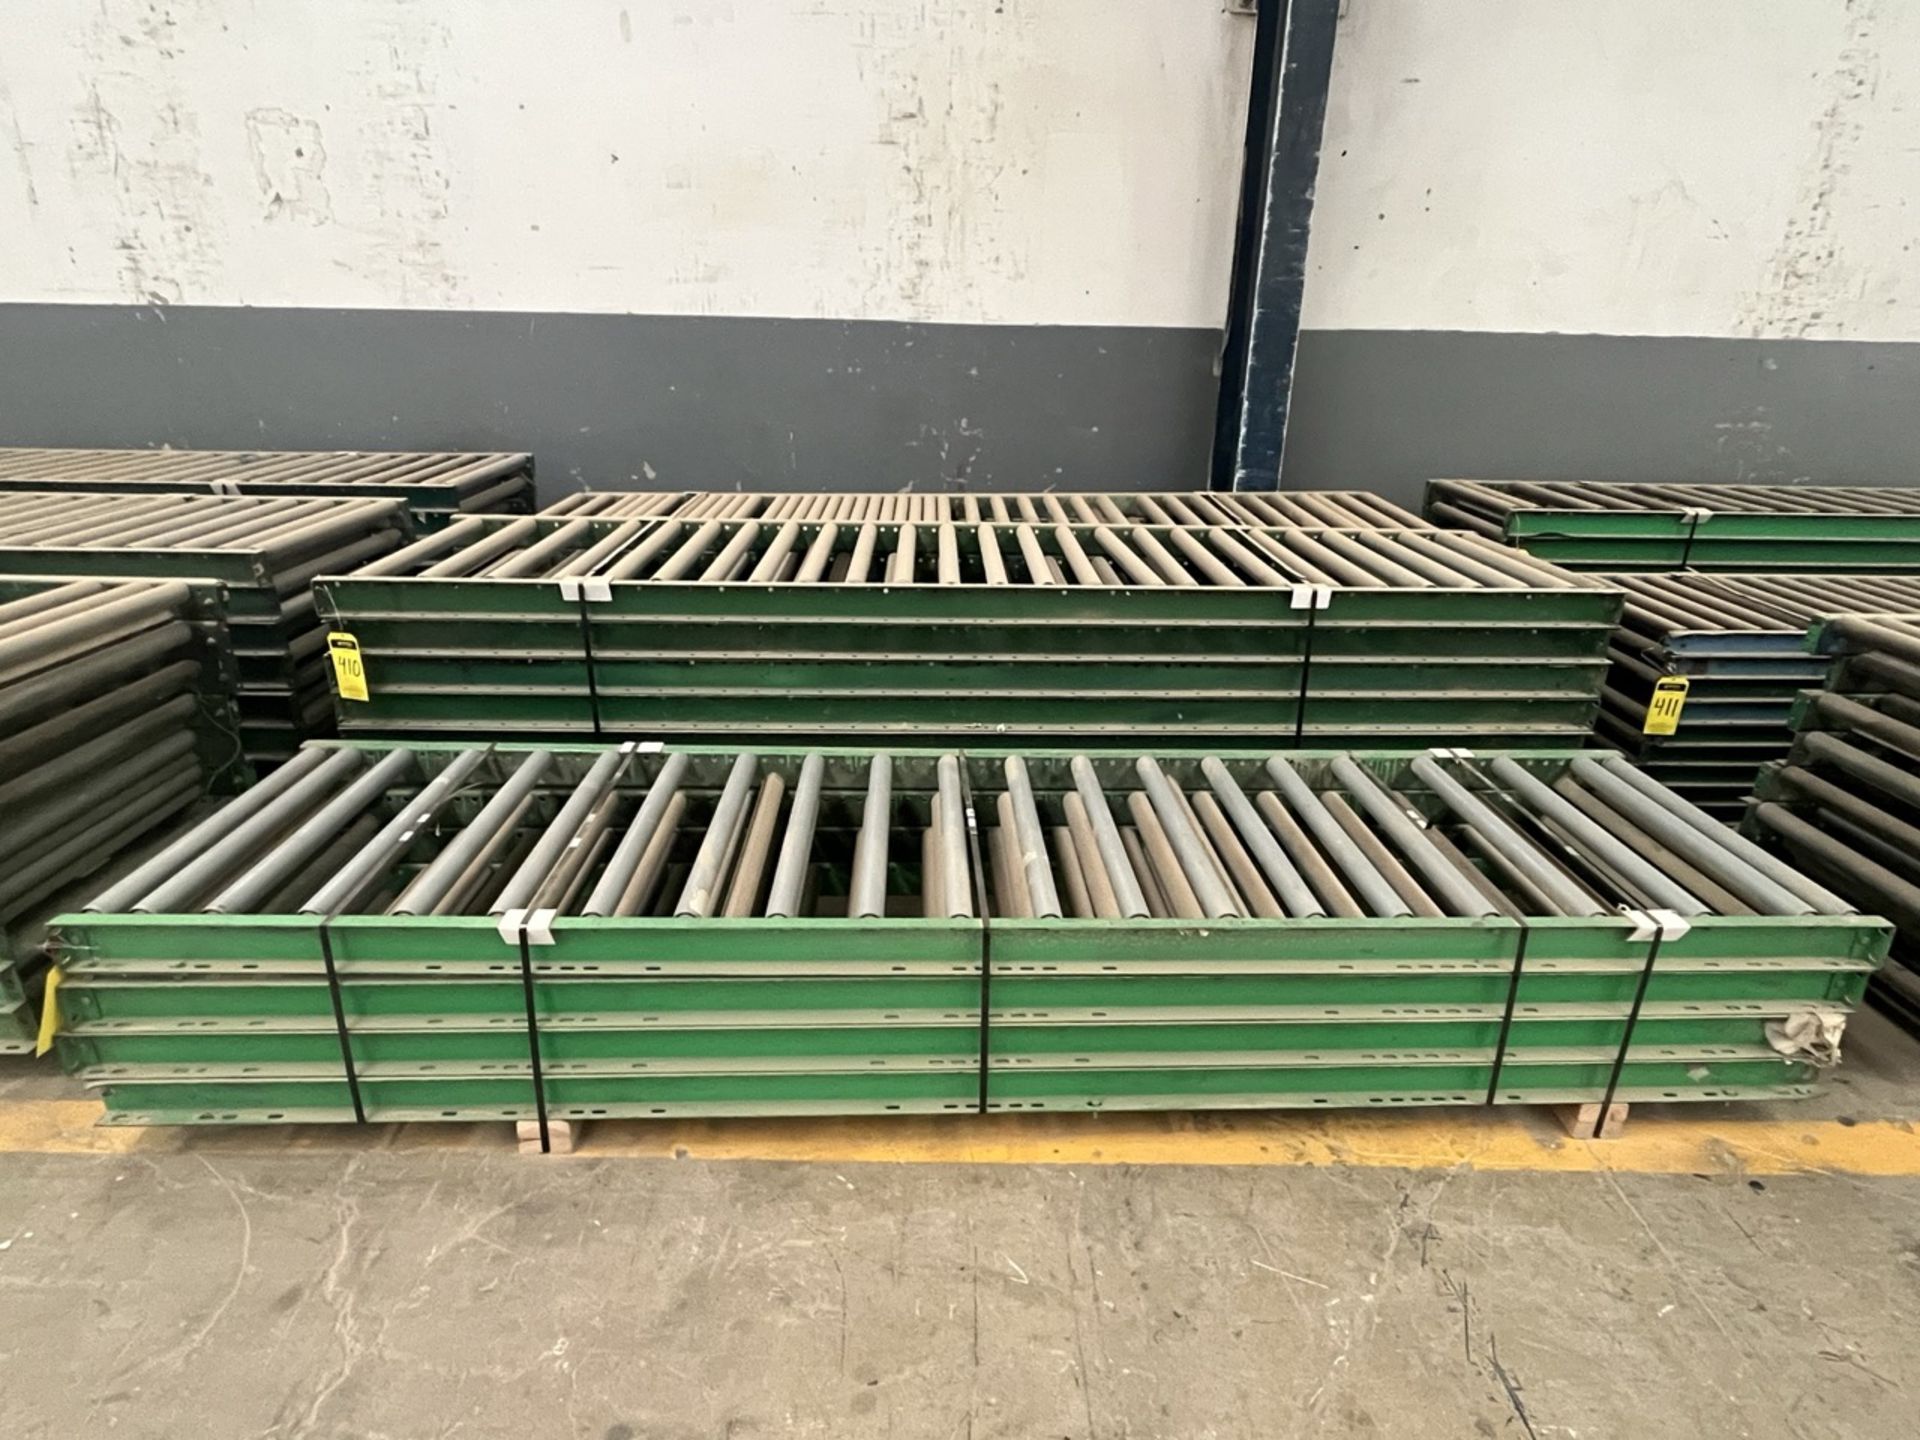 19 pieces of roller conveyor belt measuring approx. 79 cm wide x 3.05 m long each. / 19 Piezas de b